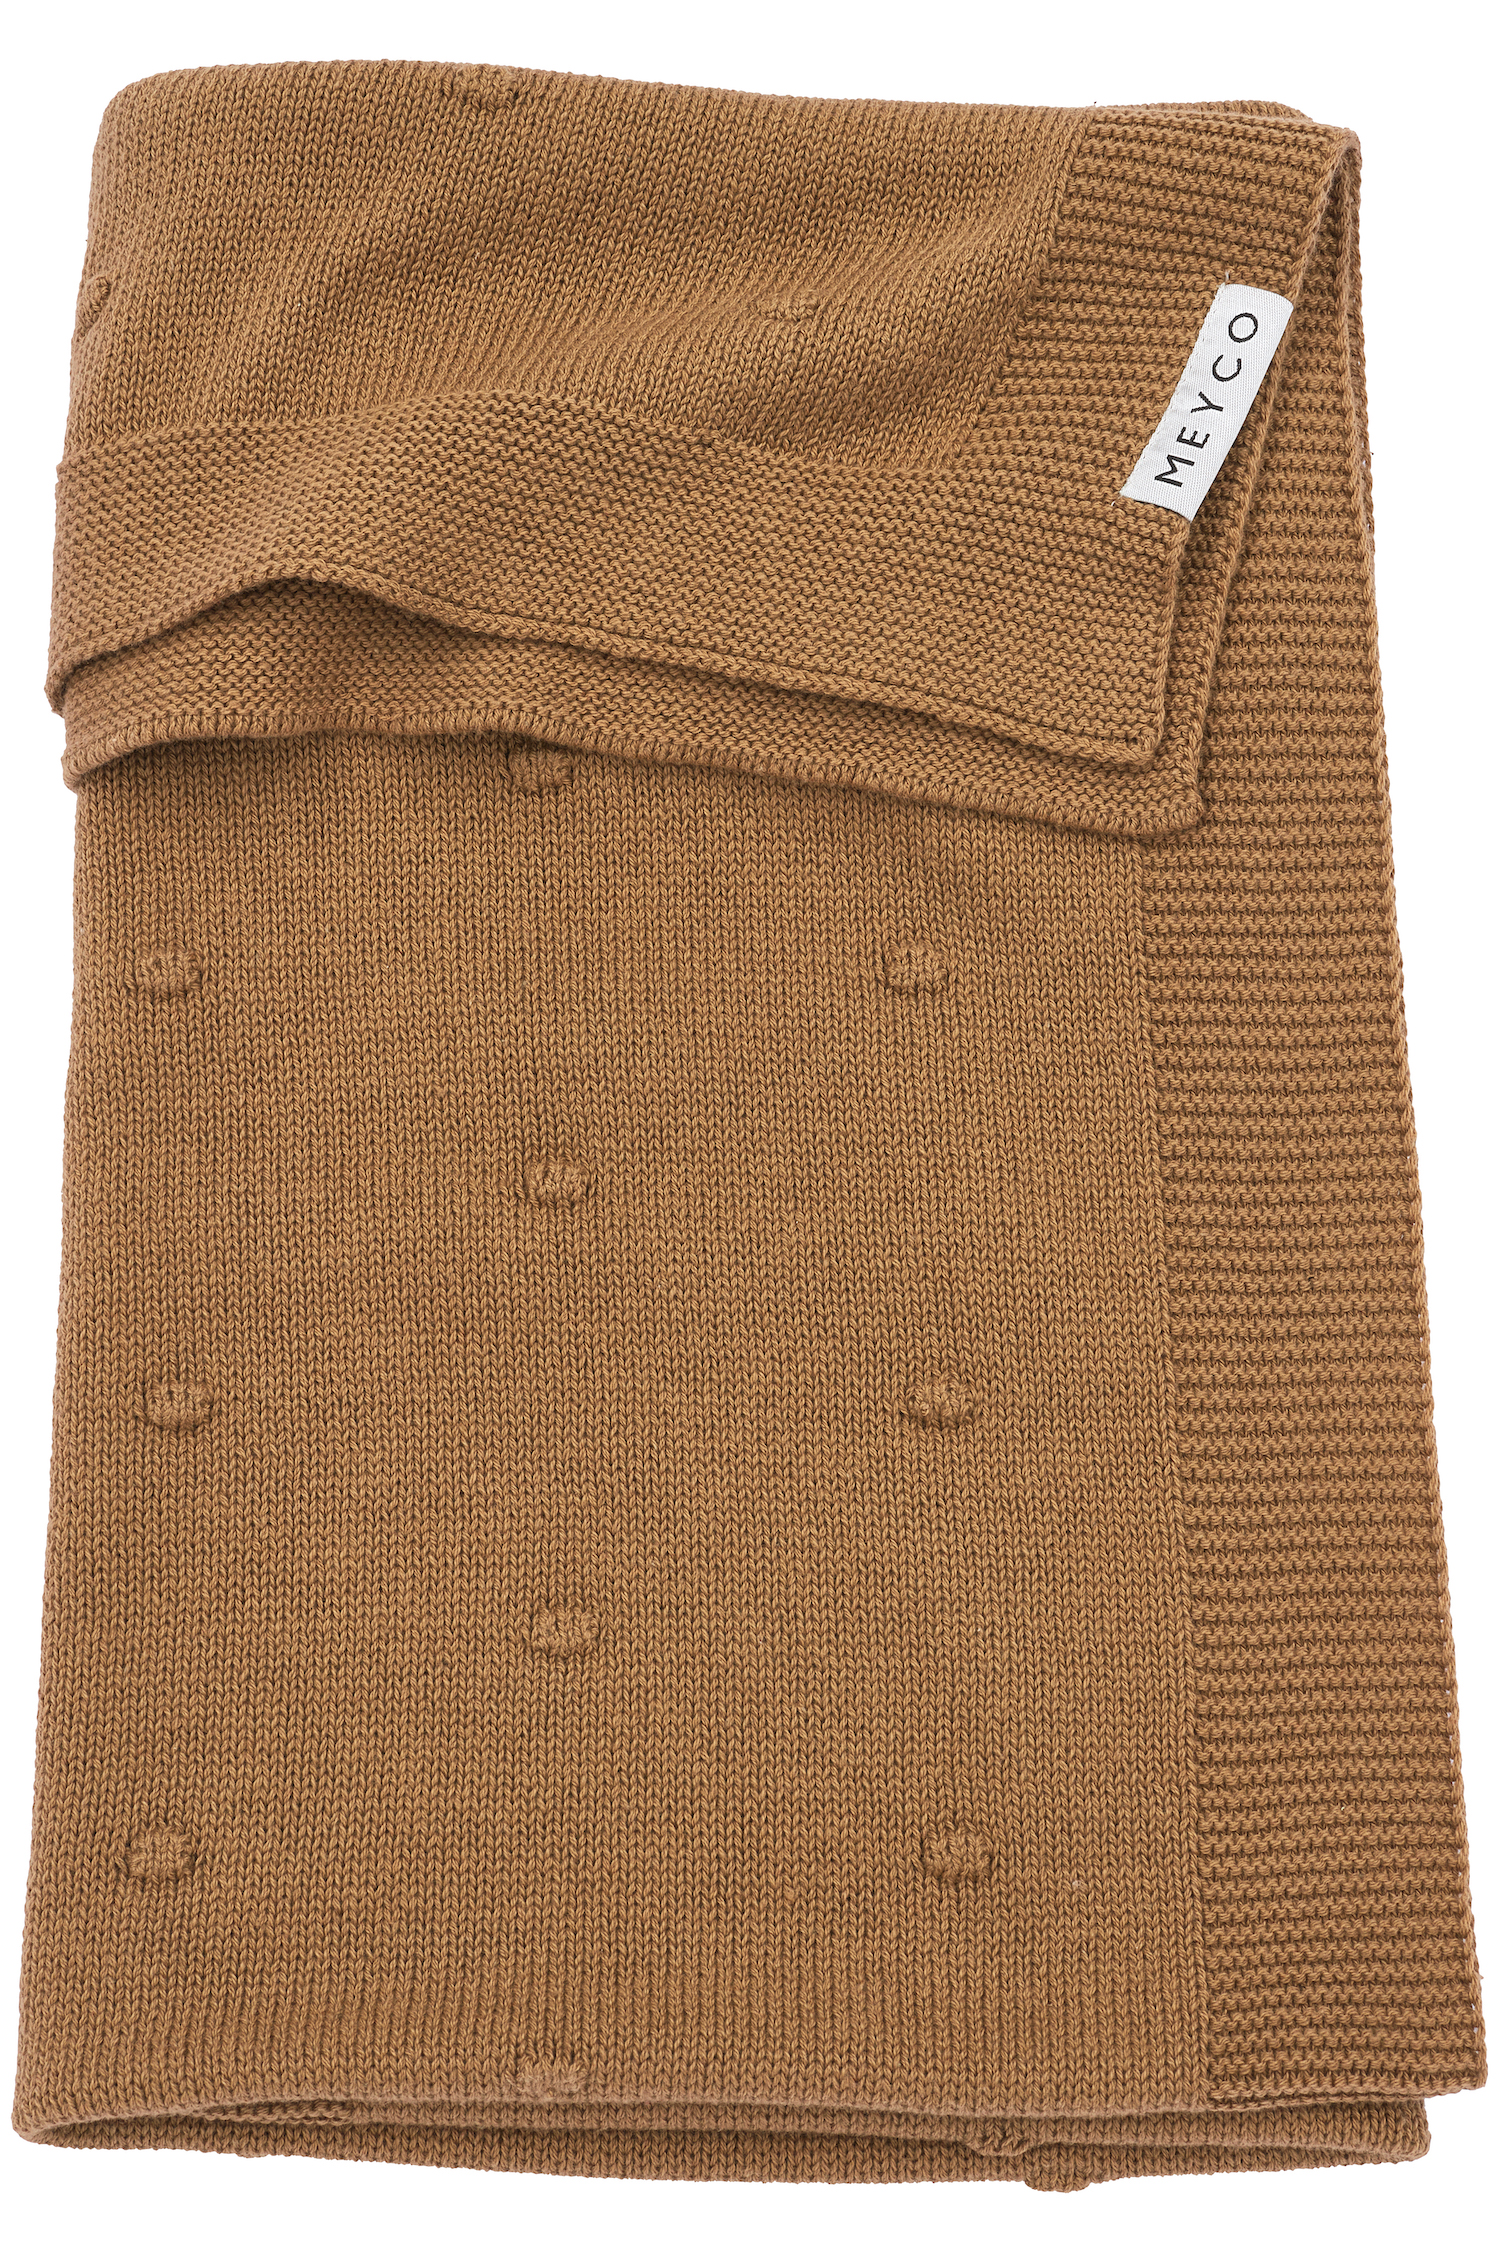 Cot Bed Blanket Mini Knots - Toffee - 100x150cm